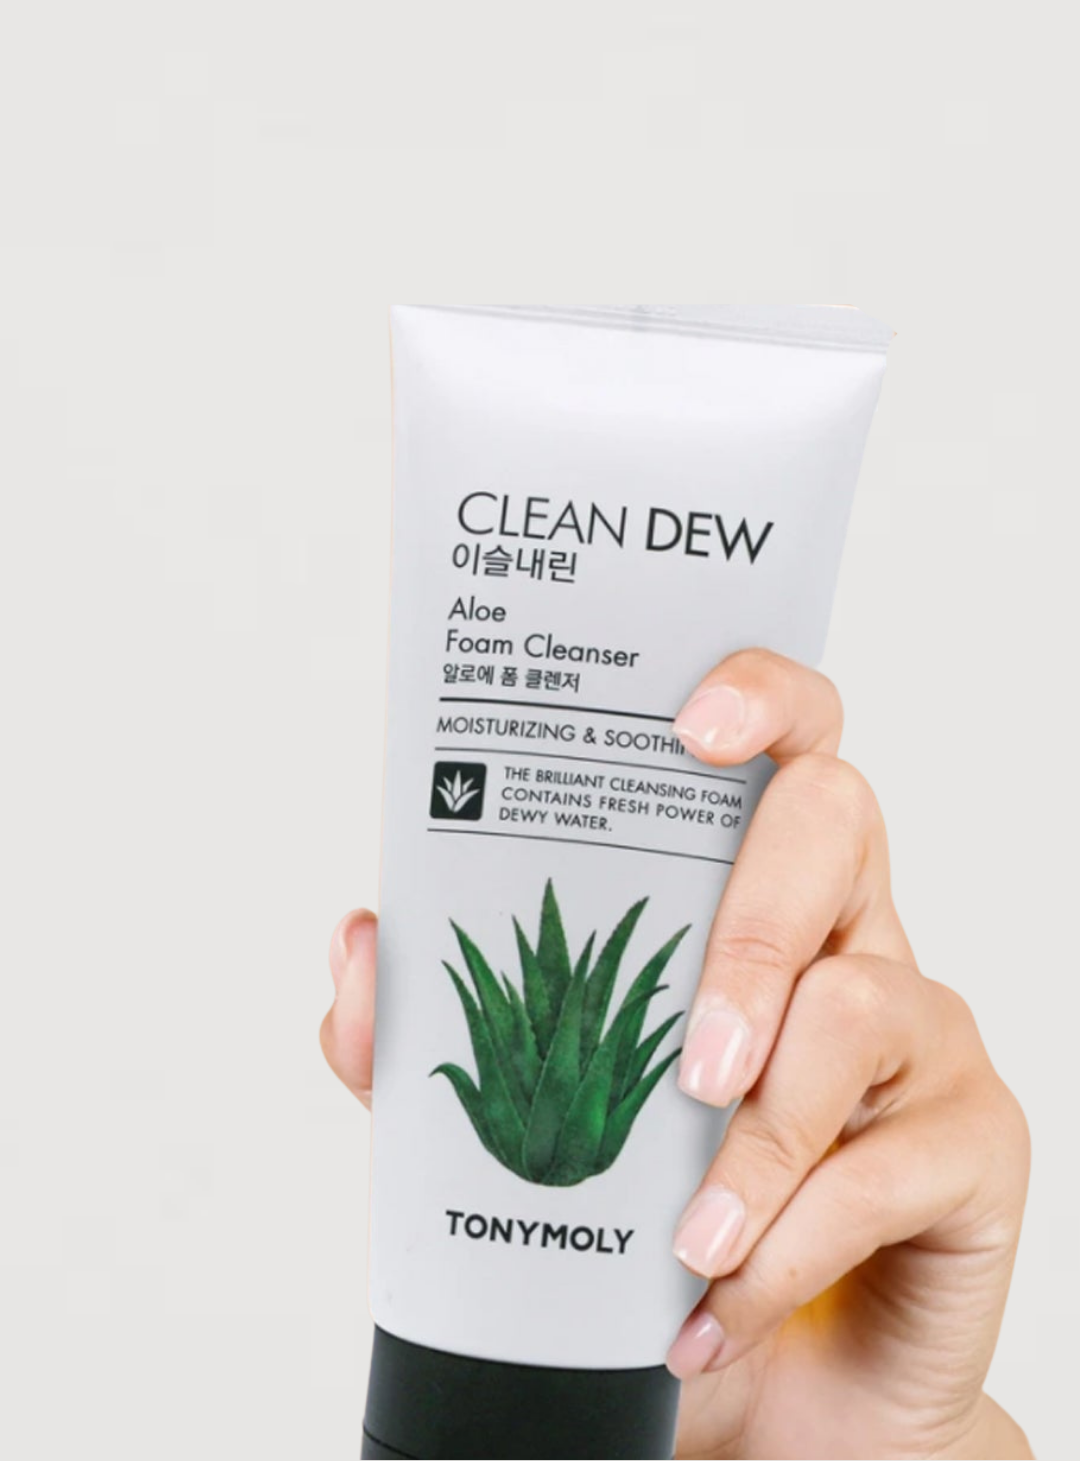 Tonymoly - Clean Dew Aloe Foam Cleanser - 180 ml